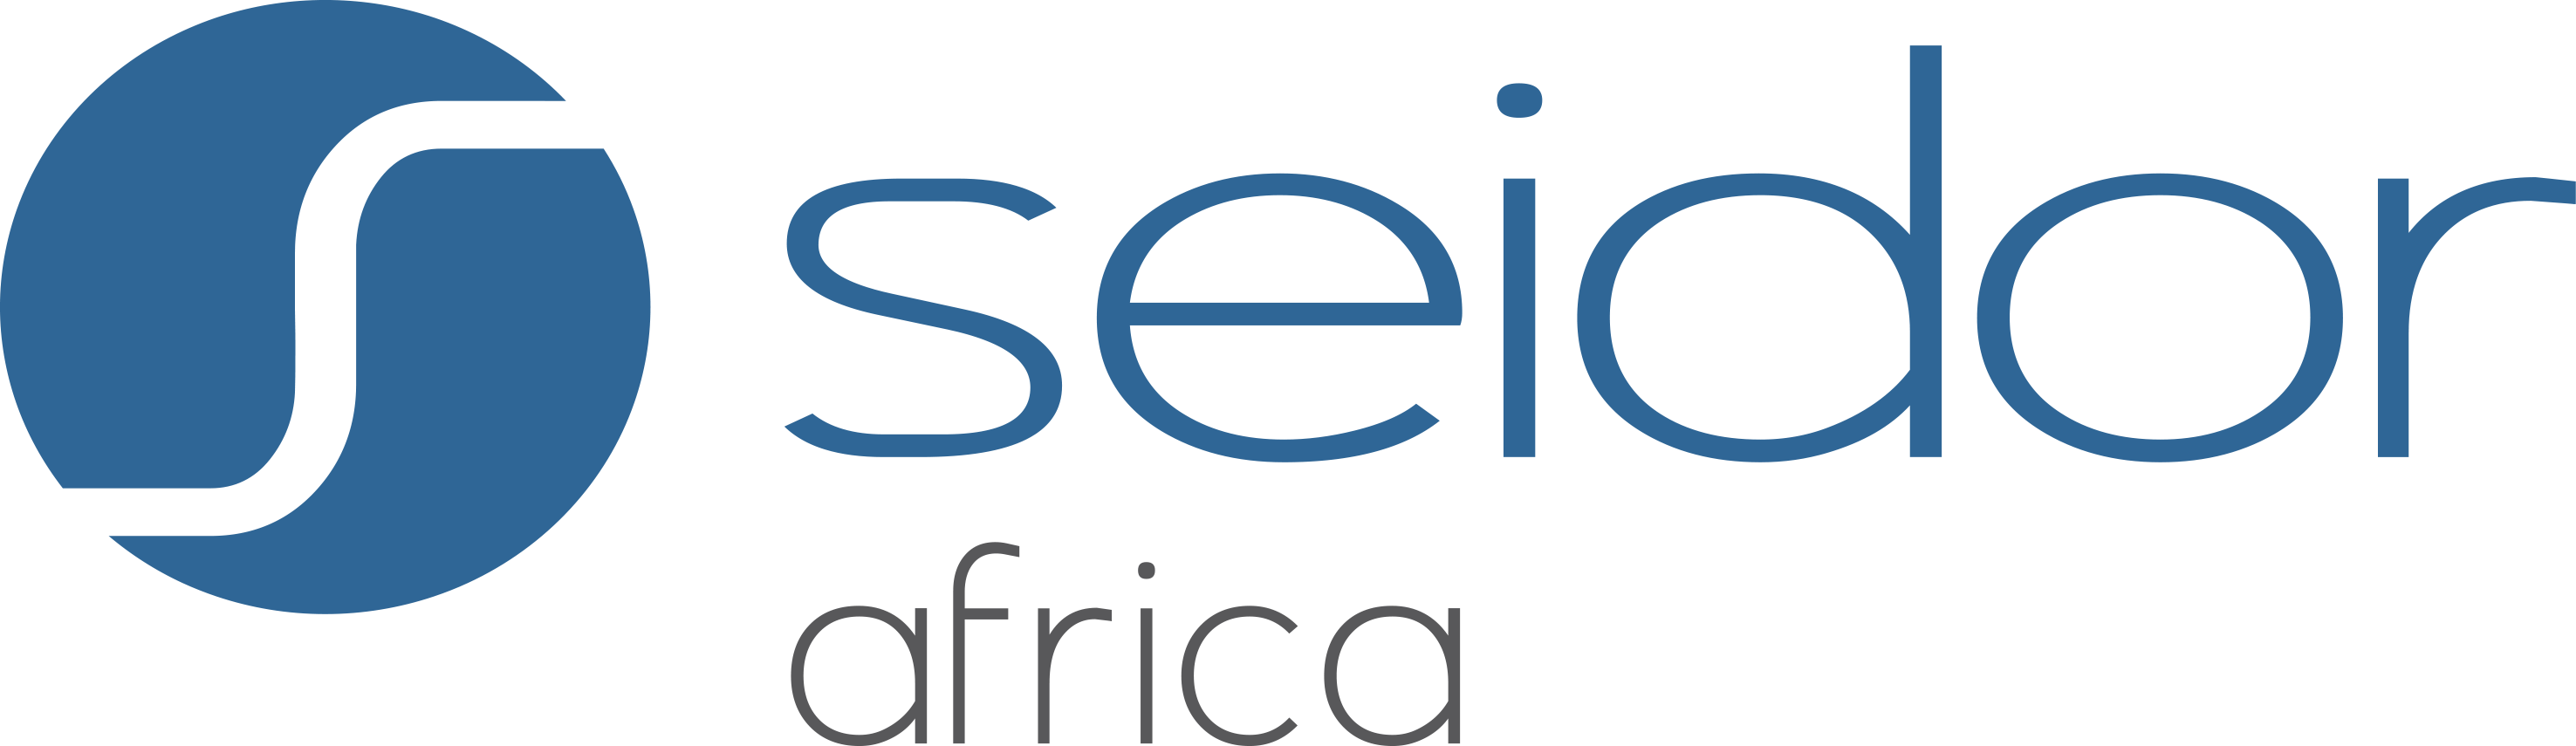 Seidor Africa Logo